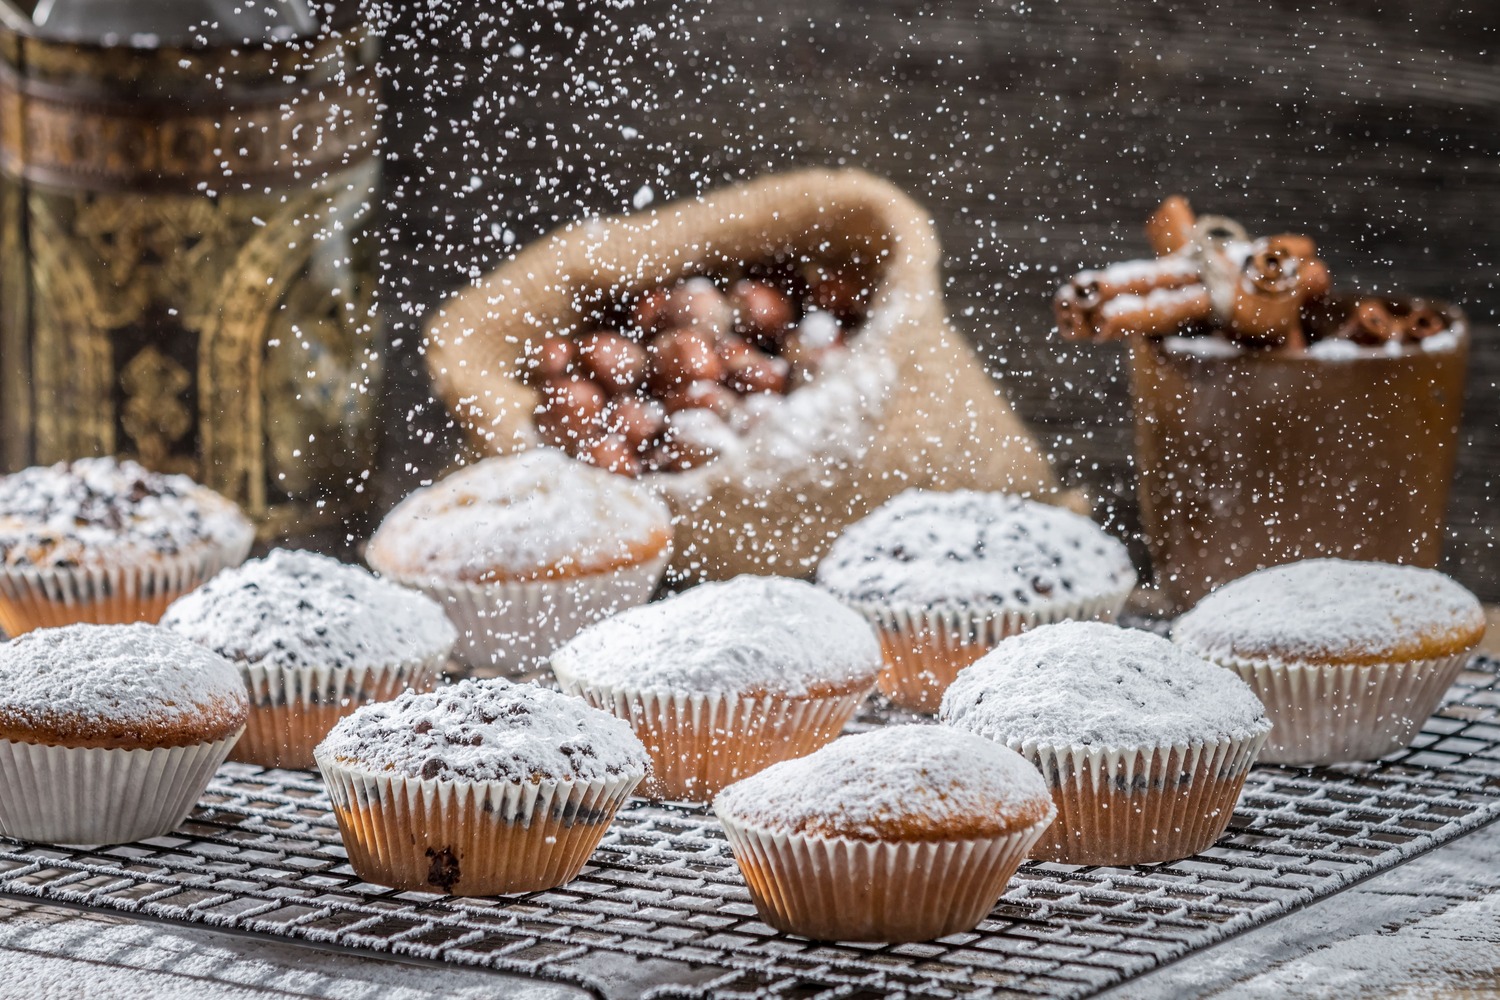 vanilla-muffins-decorated-with-icing-sugar-2022-04-08-01-07-06-utc-1-1.jpg